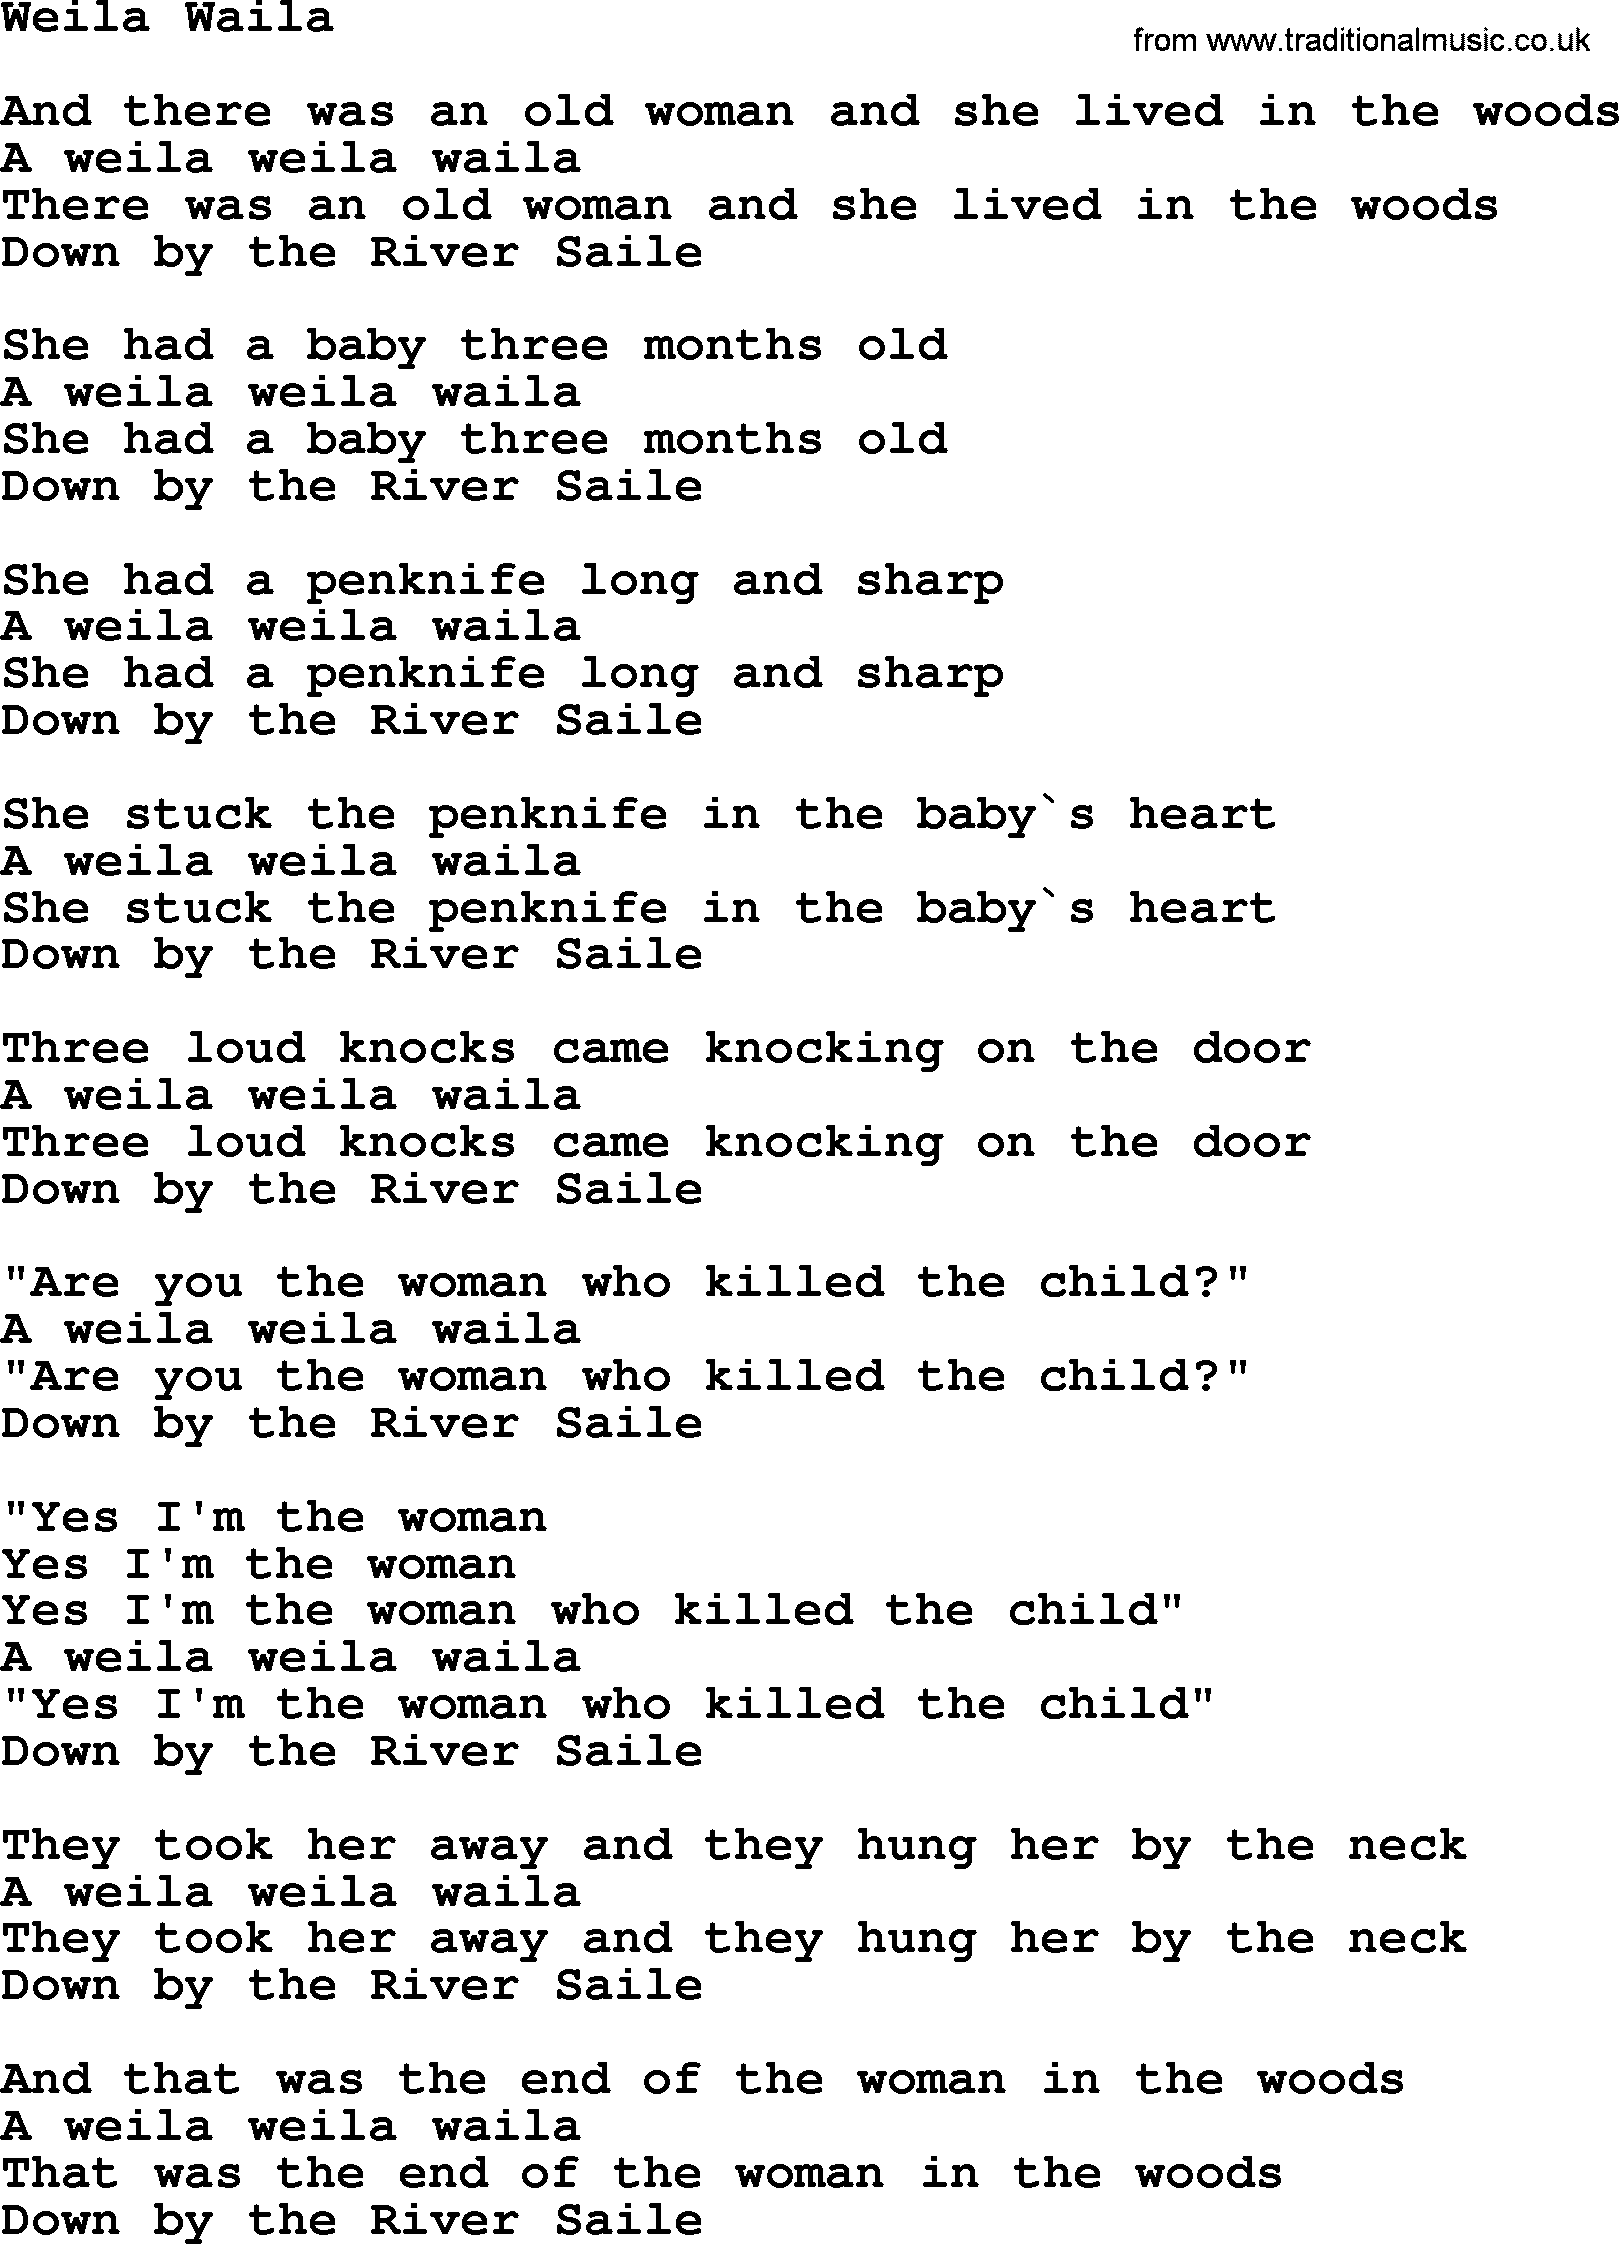 The Dubliners song: Weila Waila, lyrics